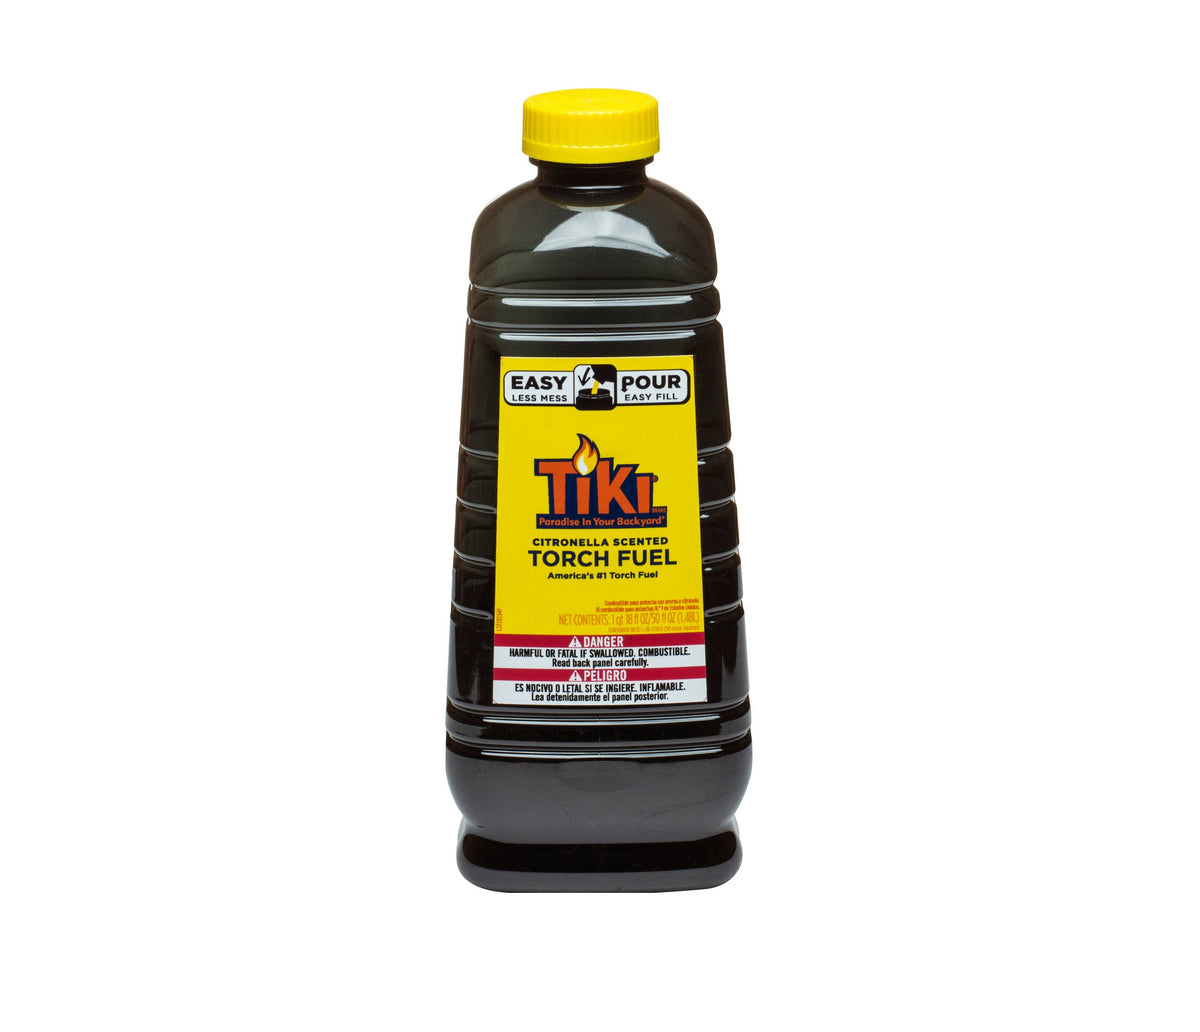 Tiki 1216154 Lemongrass Citronella Torch Fuel, Yellow, 50 oz